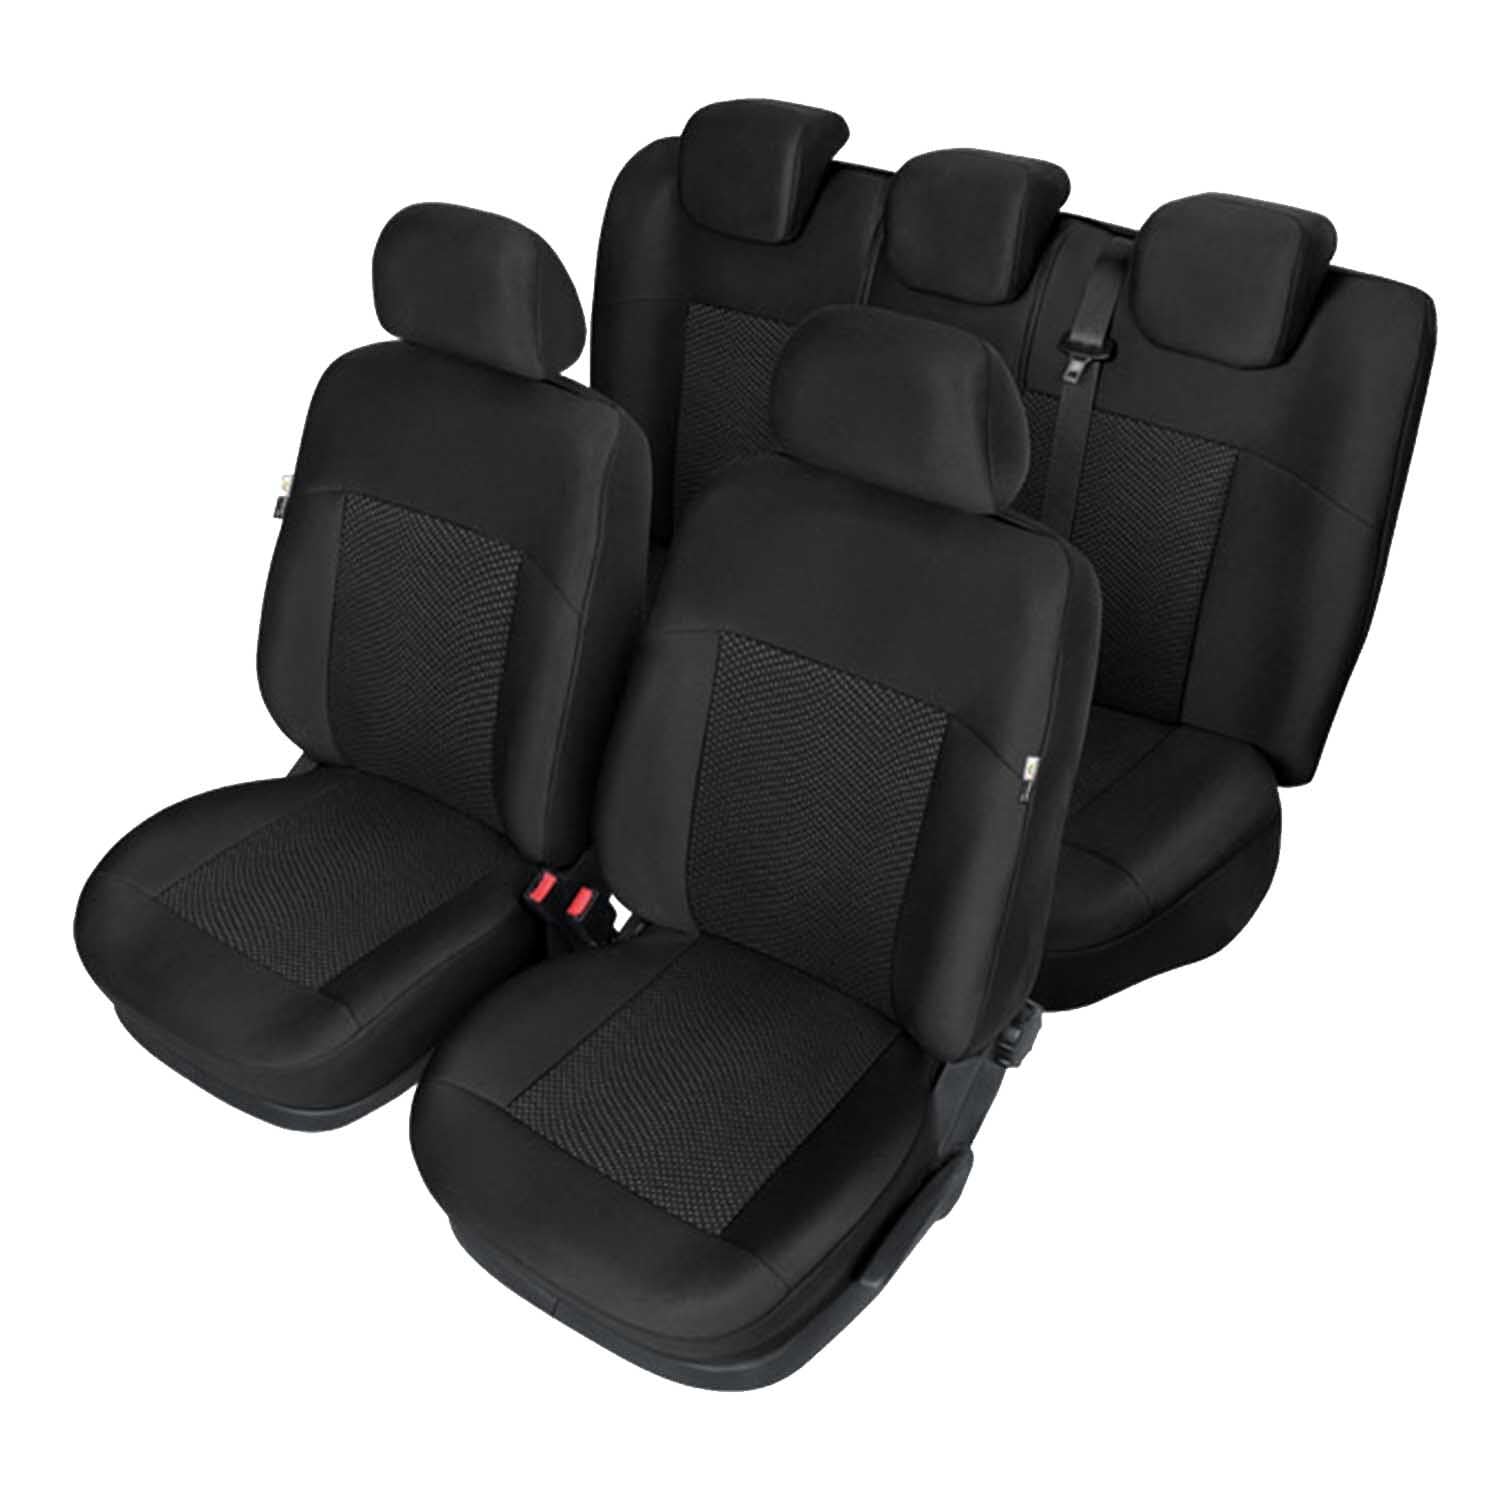 Autositzbezüge Autositzschoner Sitzbezüge Kompatibel mit Suzuki SX4 S-Cross Auto Sitzbezug Schwarz Autositzauflage Autositz Sitzauflagen Tuning Auto Zubehör Innenraum von Saferide